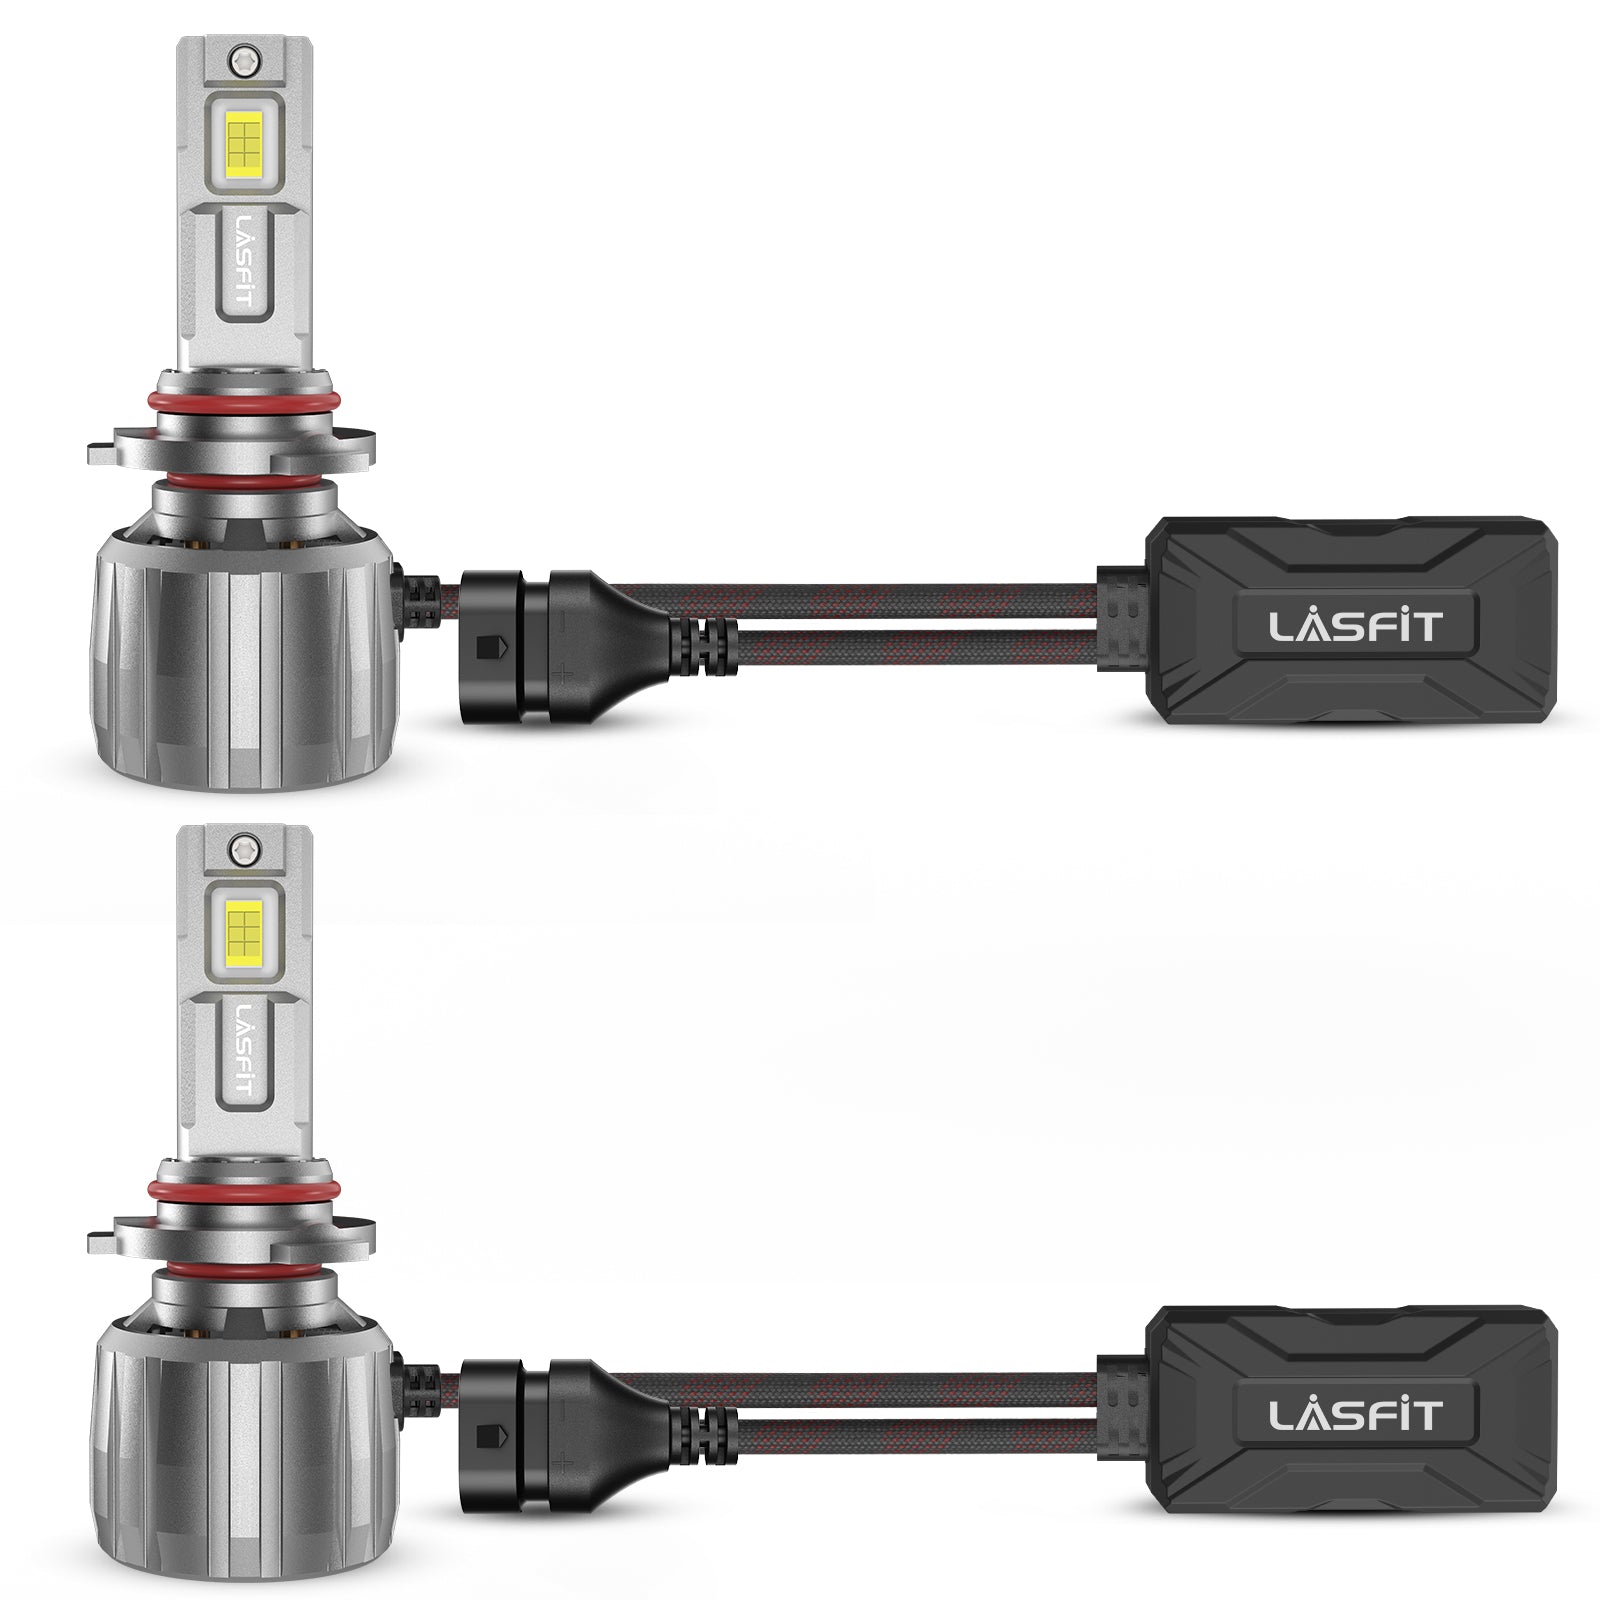 MIFMIA 9005 LED Headlight Bulbs, 60W 8000 Lumens 300% Brighter HB3 650